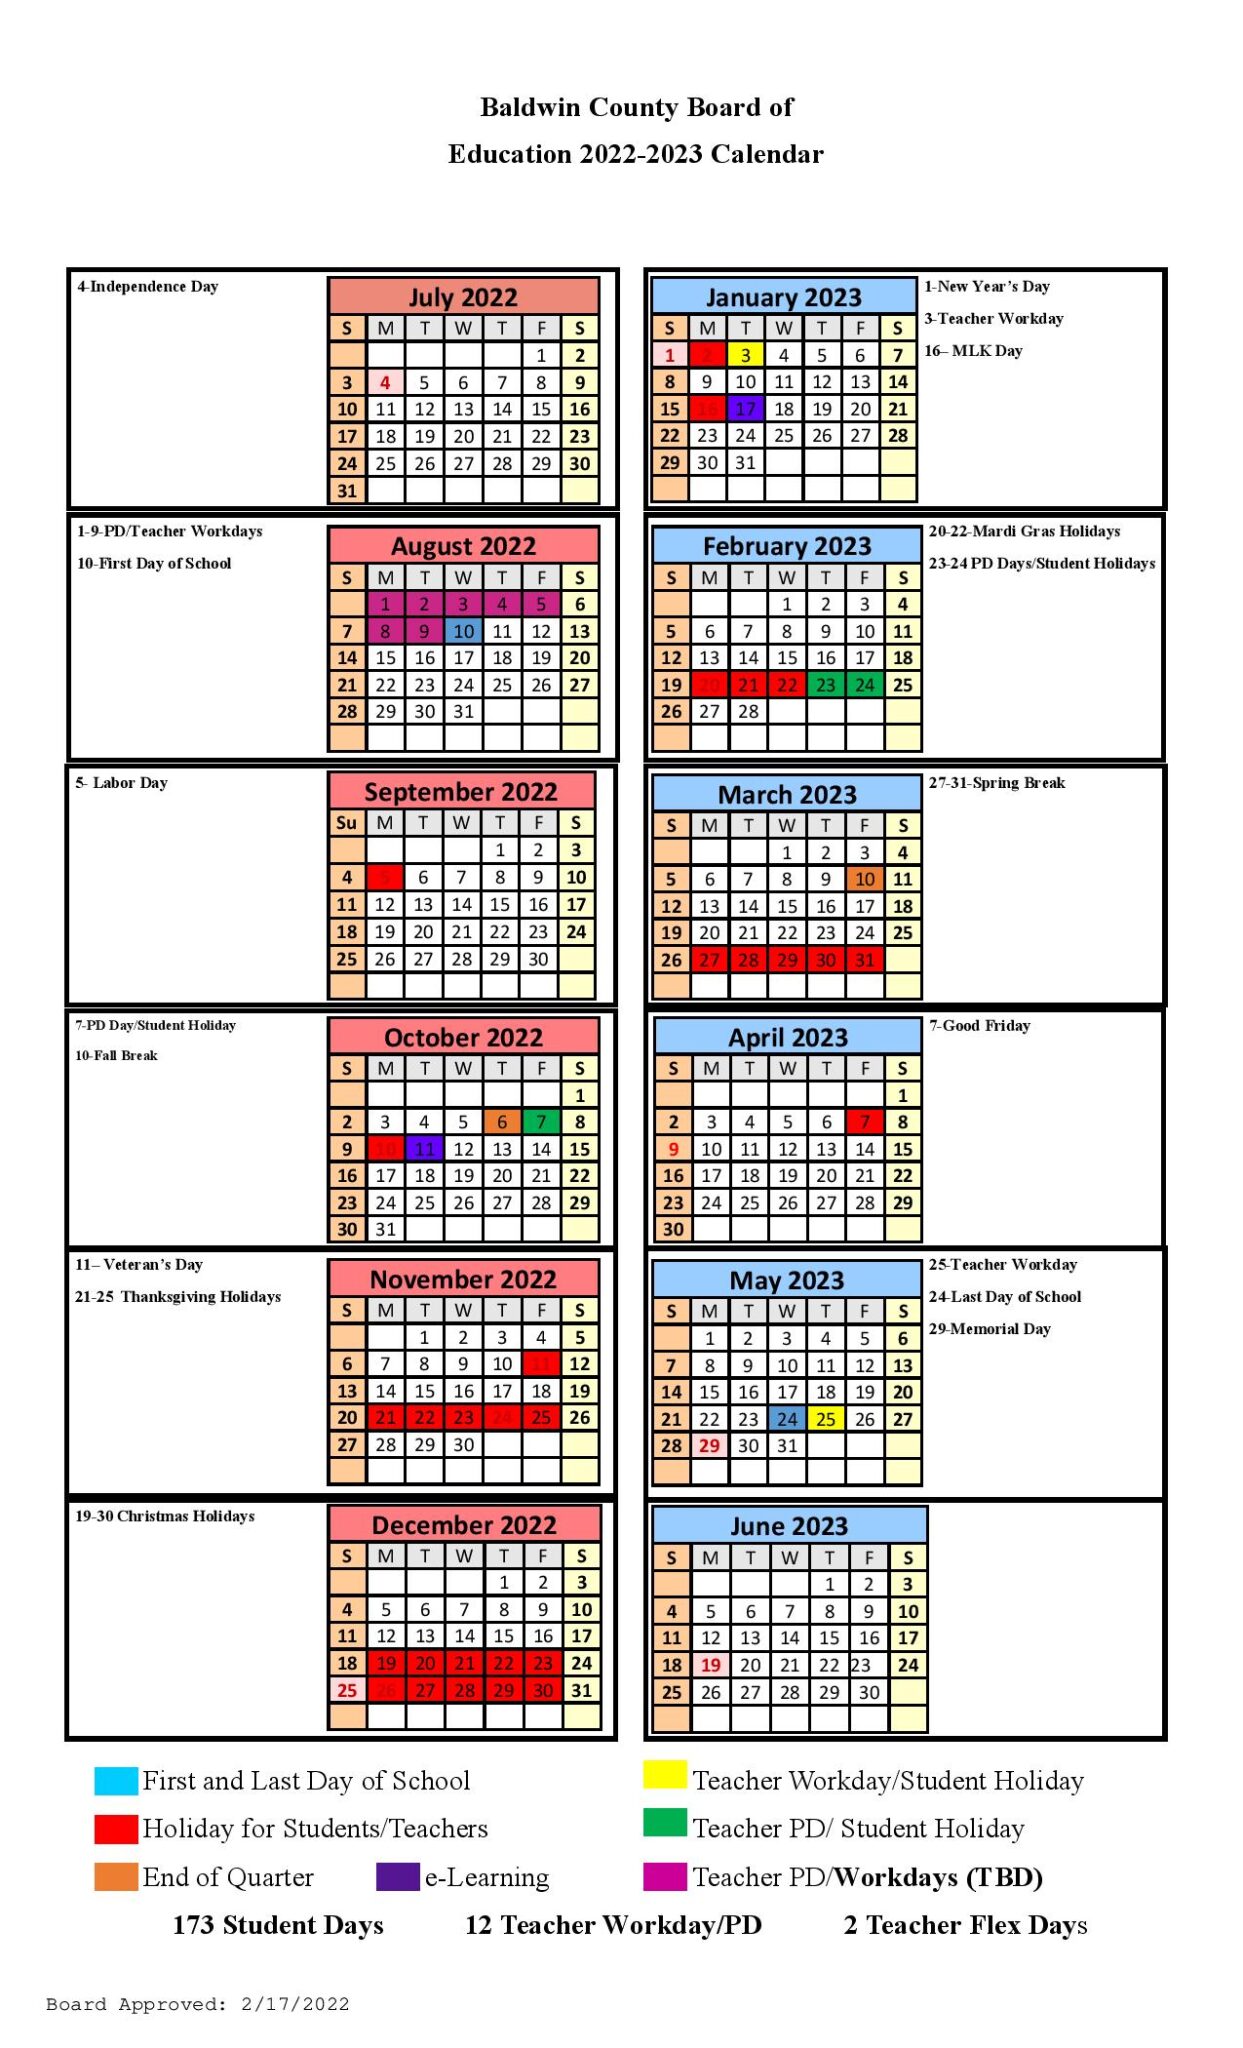 Baldwin County Public Schools Calendar 2022-2023